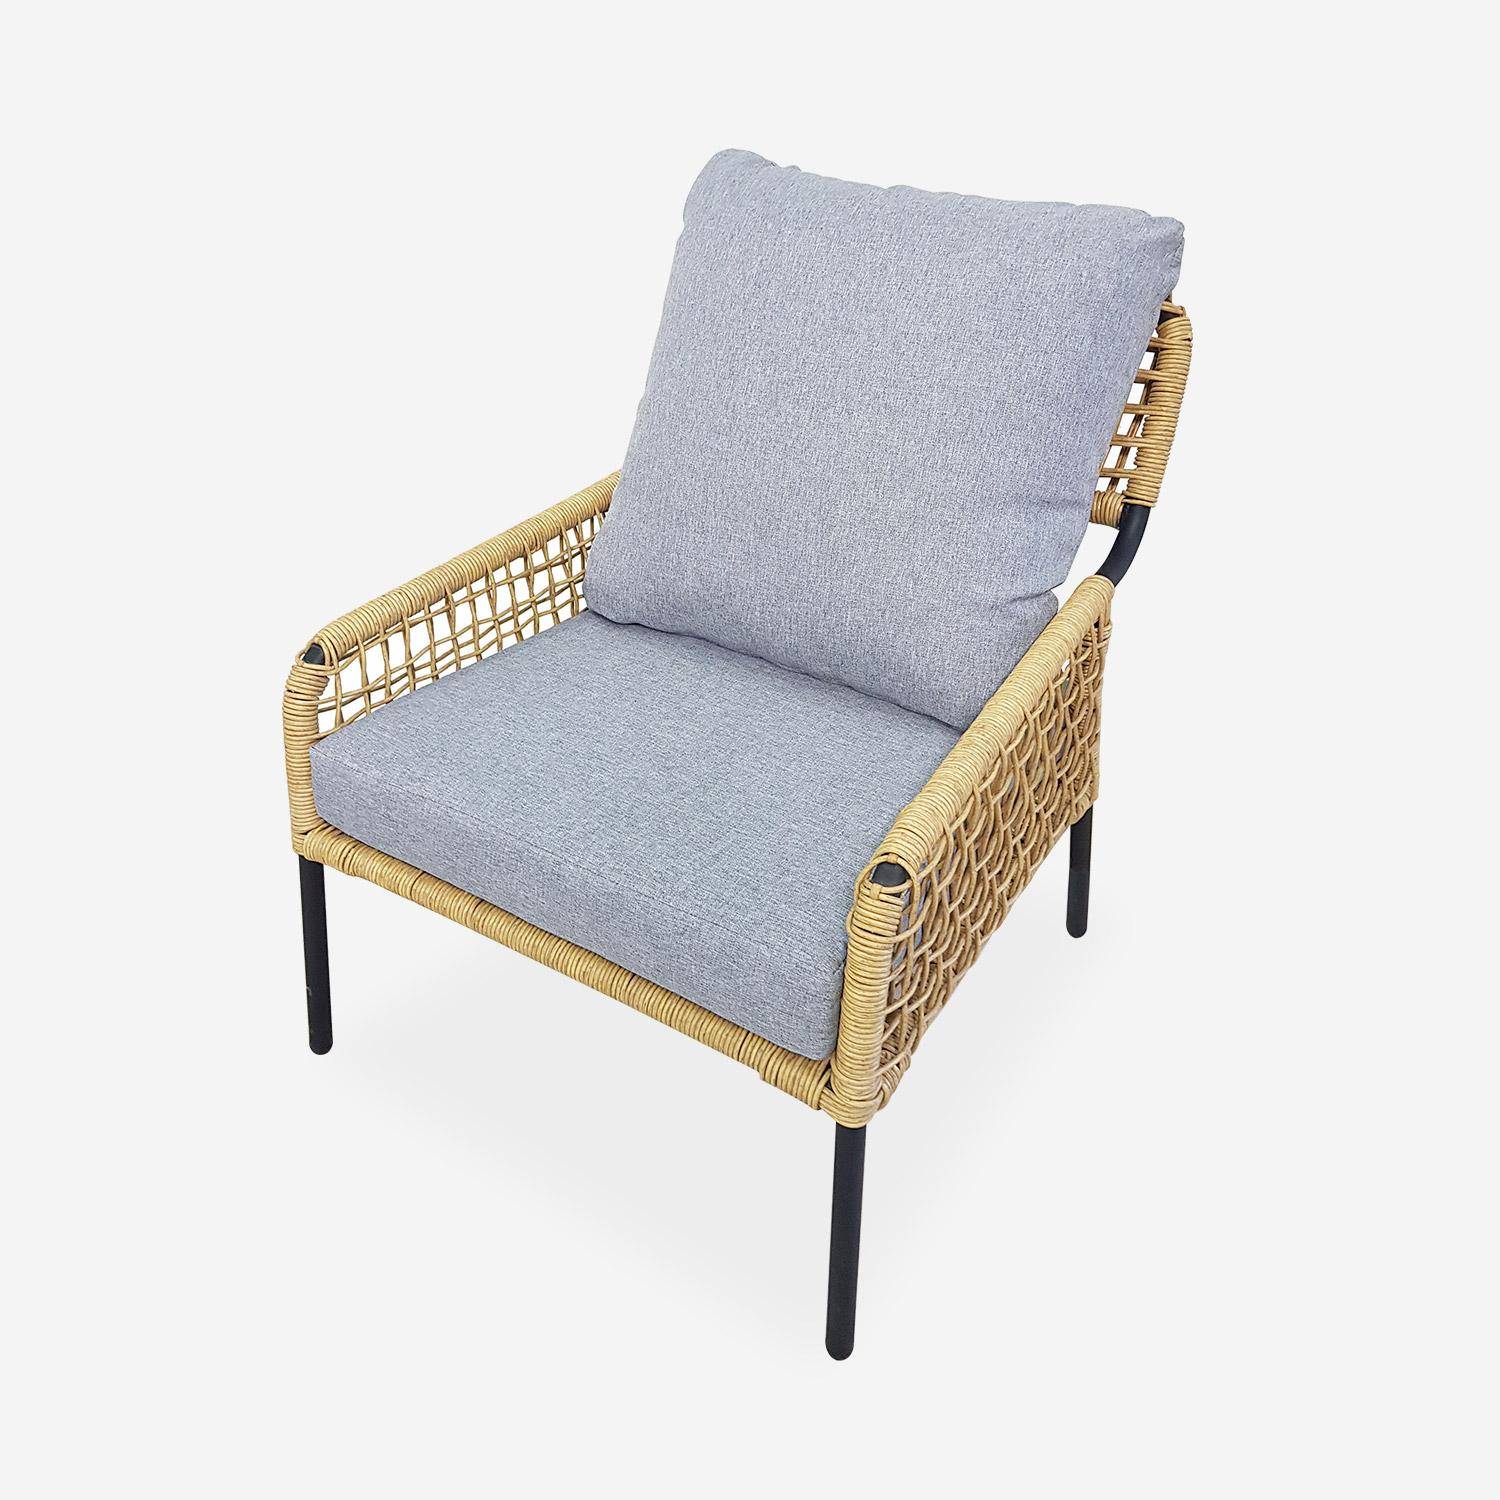 4-seater bamboo-effect rattan garden sofa set - Komodo - Natural, Grey,sweeek,Photo3